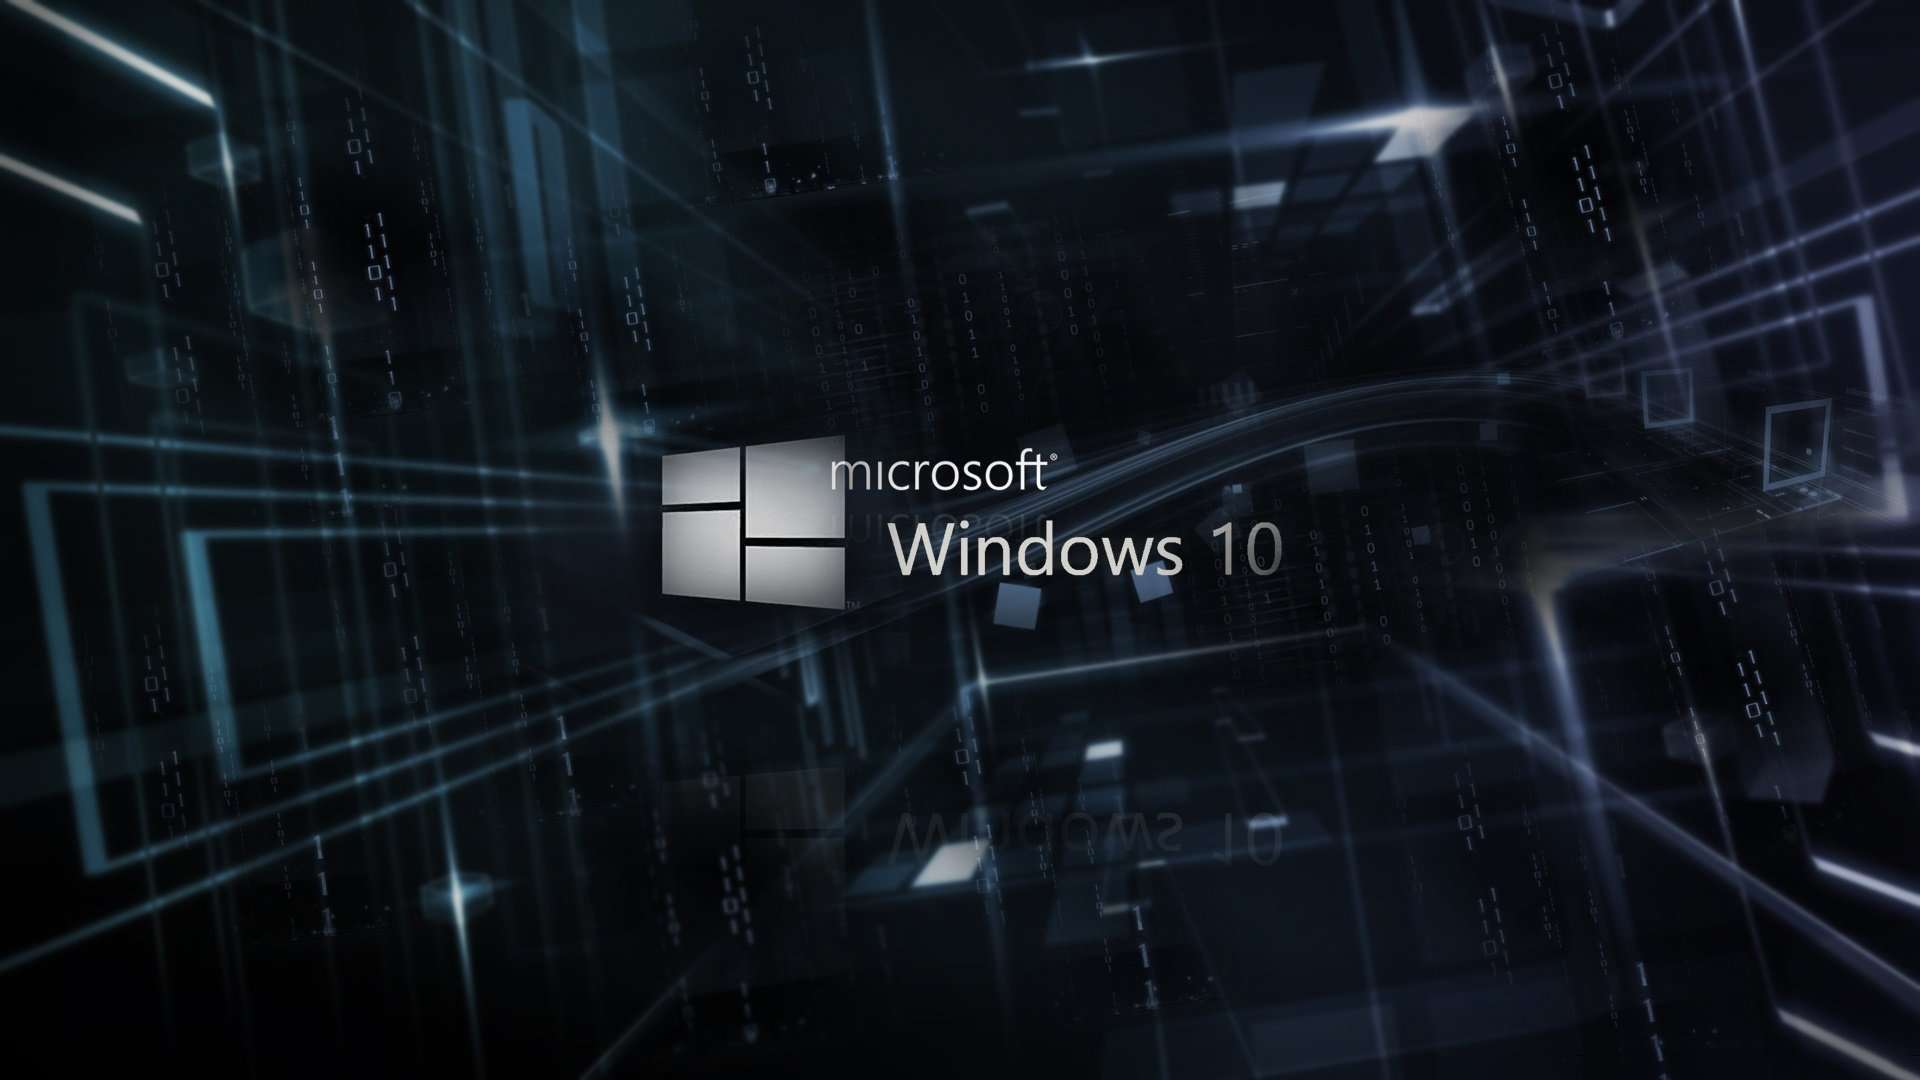 HD Windows 10 Wallpaper 10 logo HD 1920x1080 Wallpaper